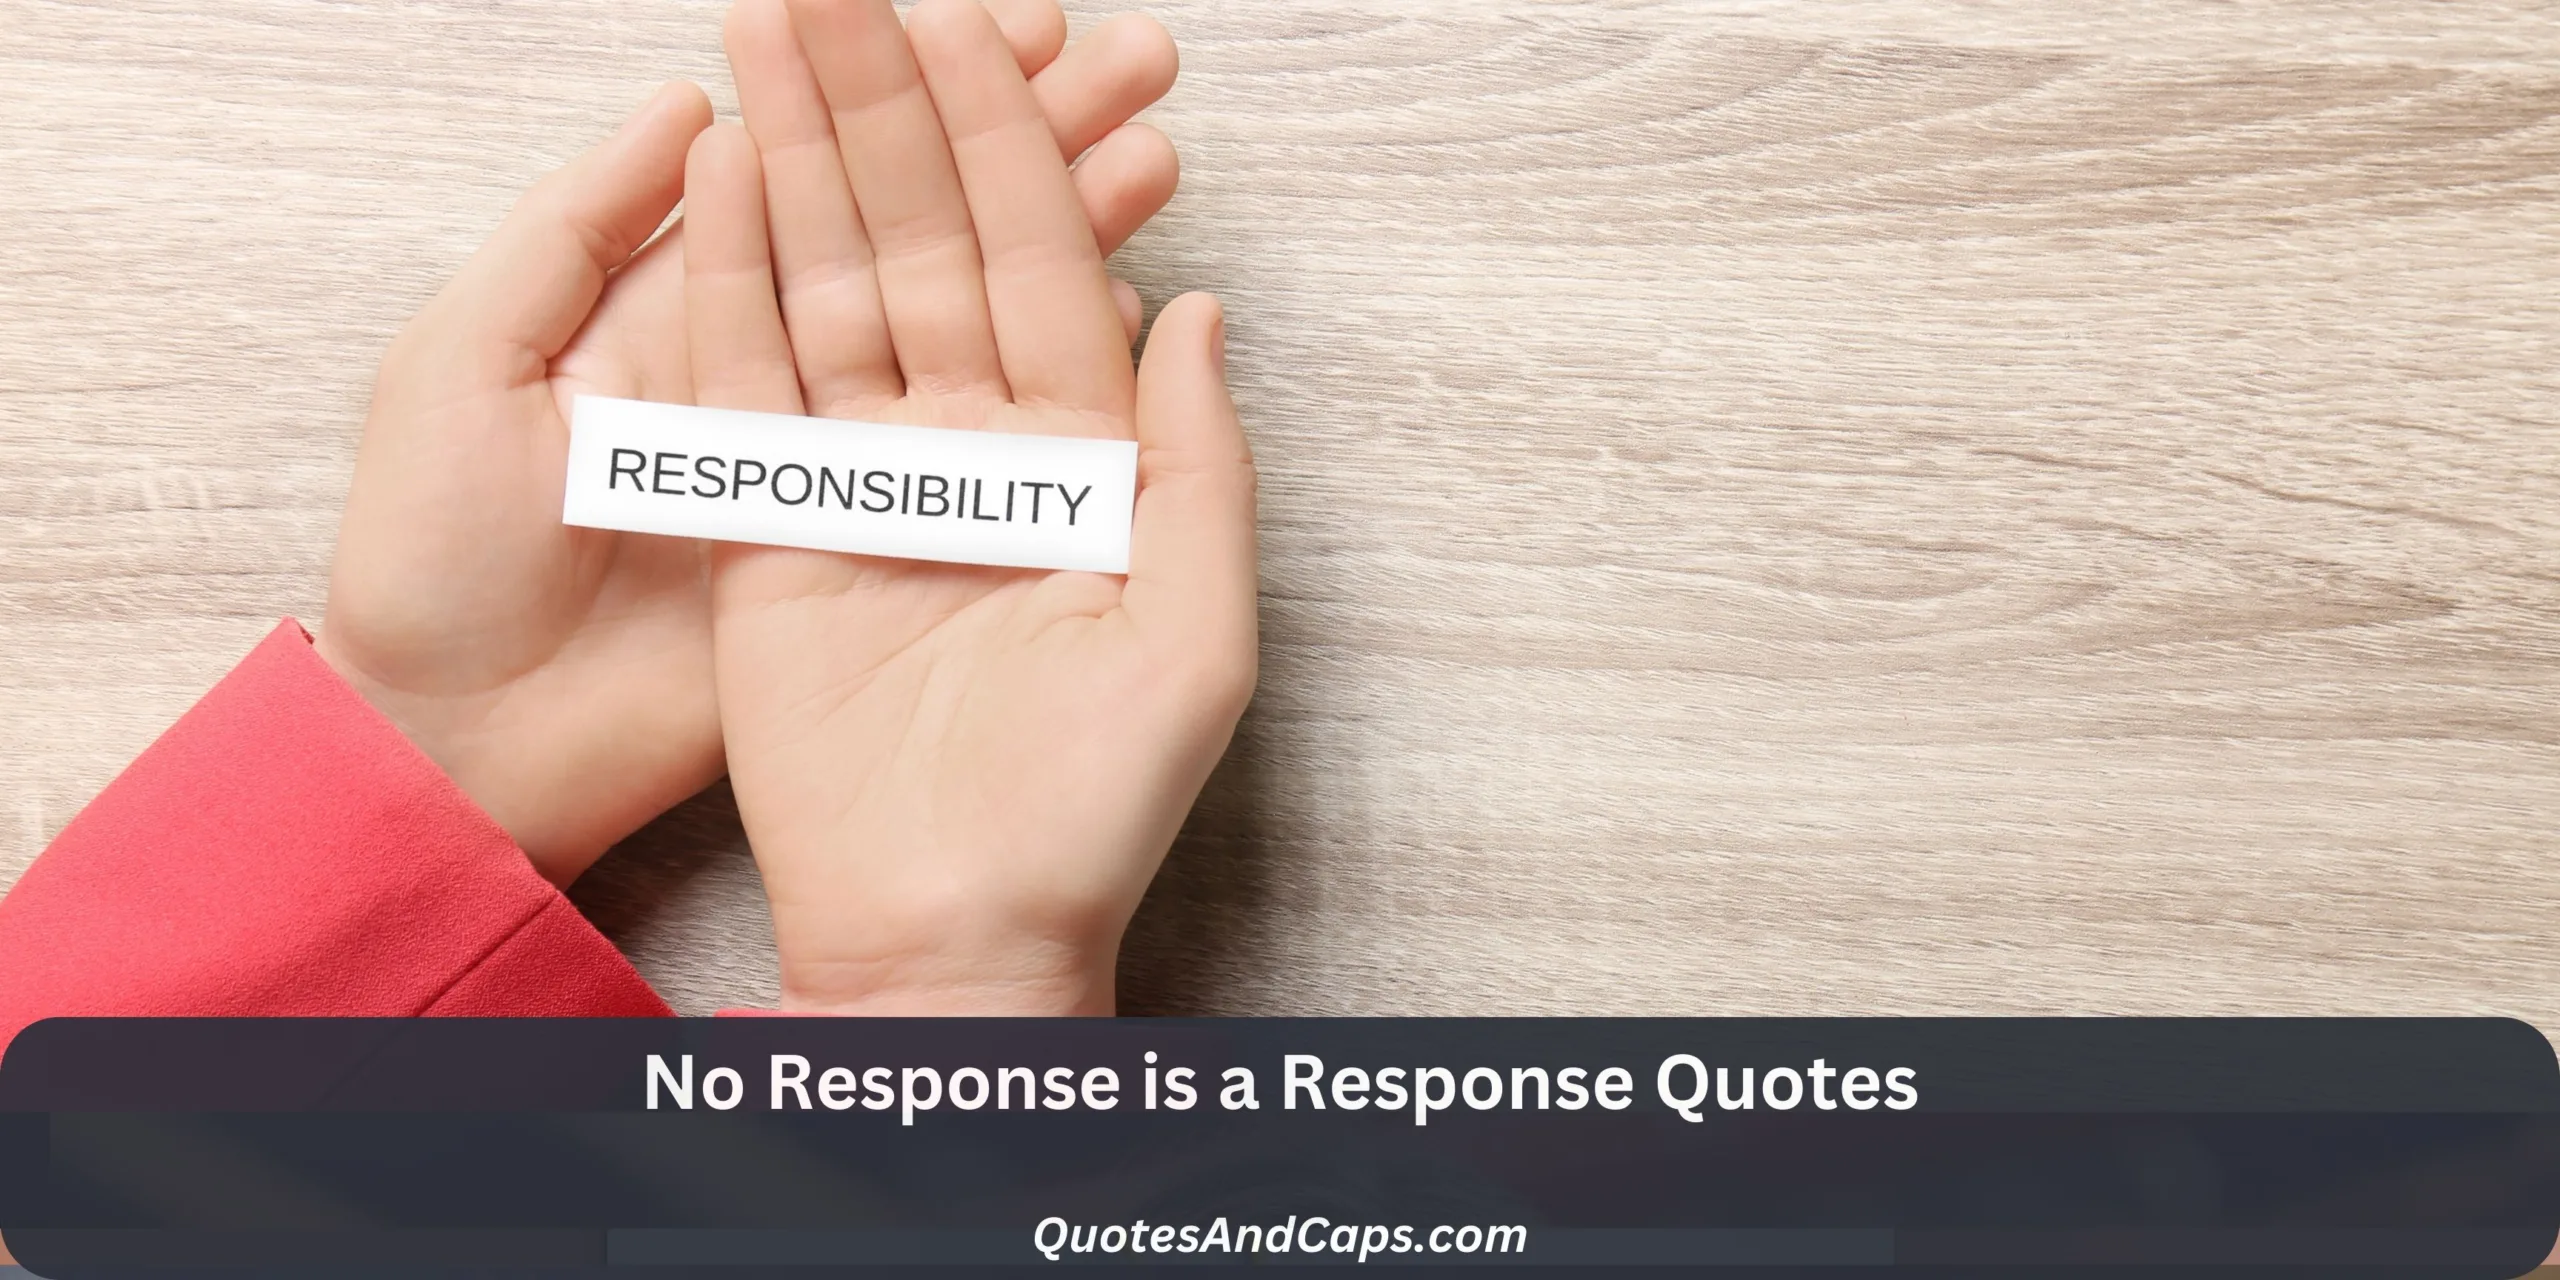 No Response is a Response Quotes